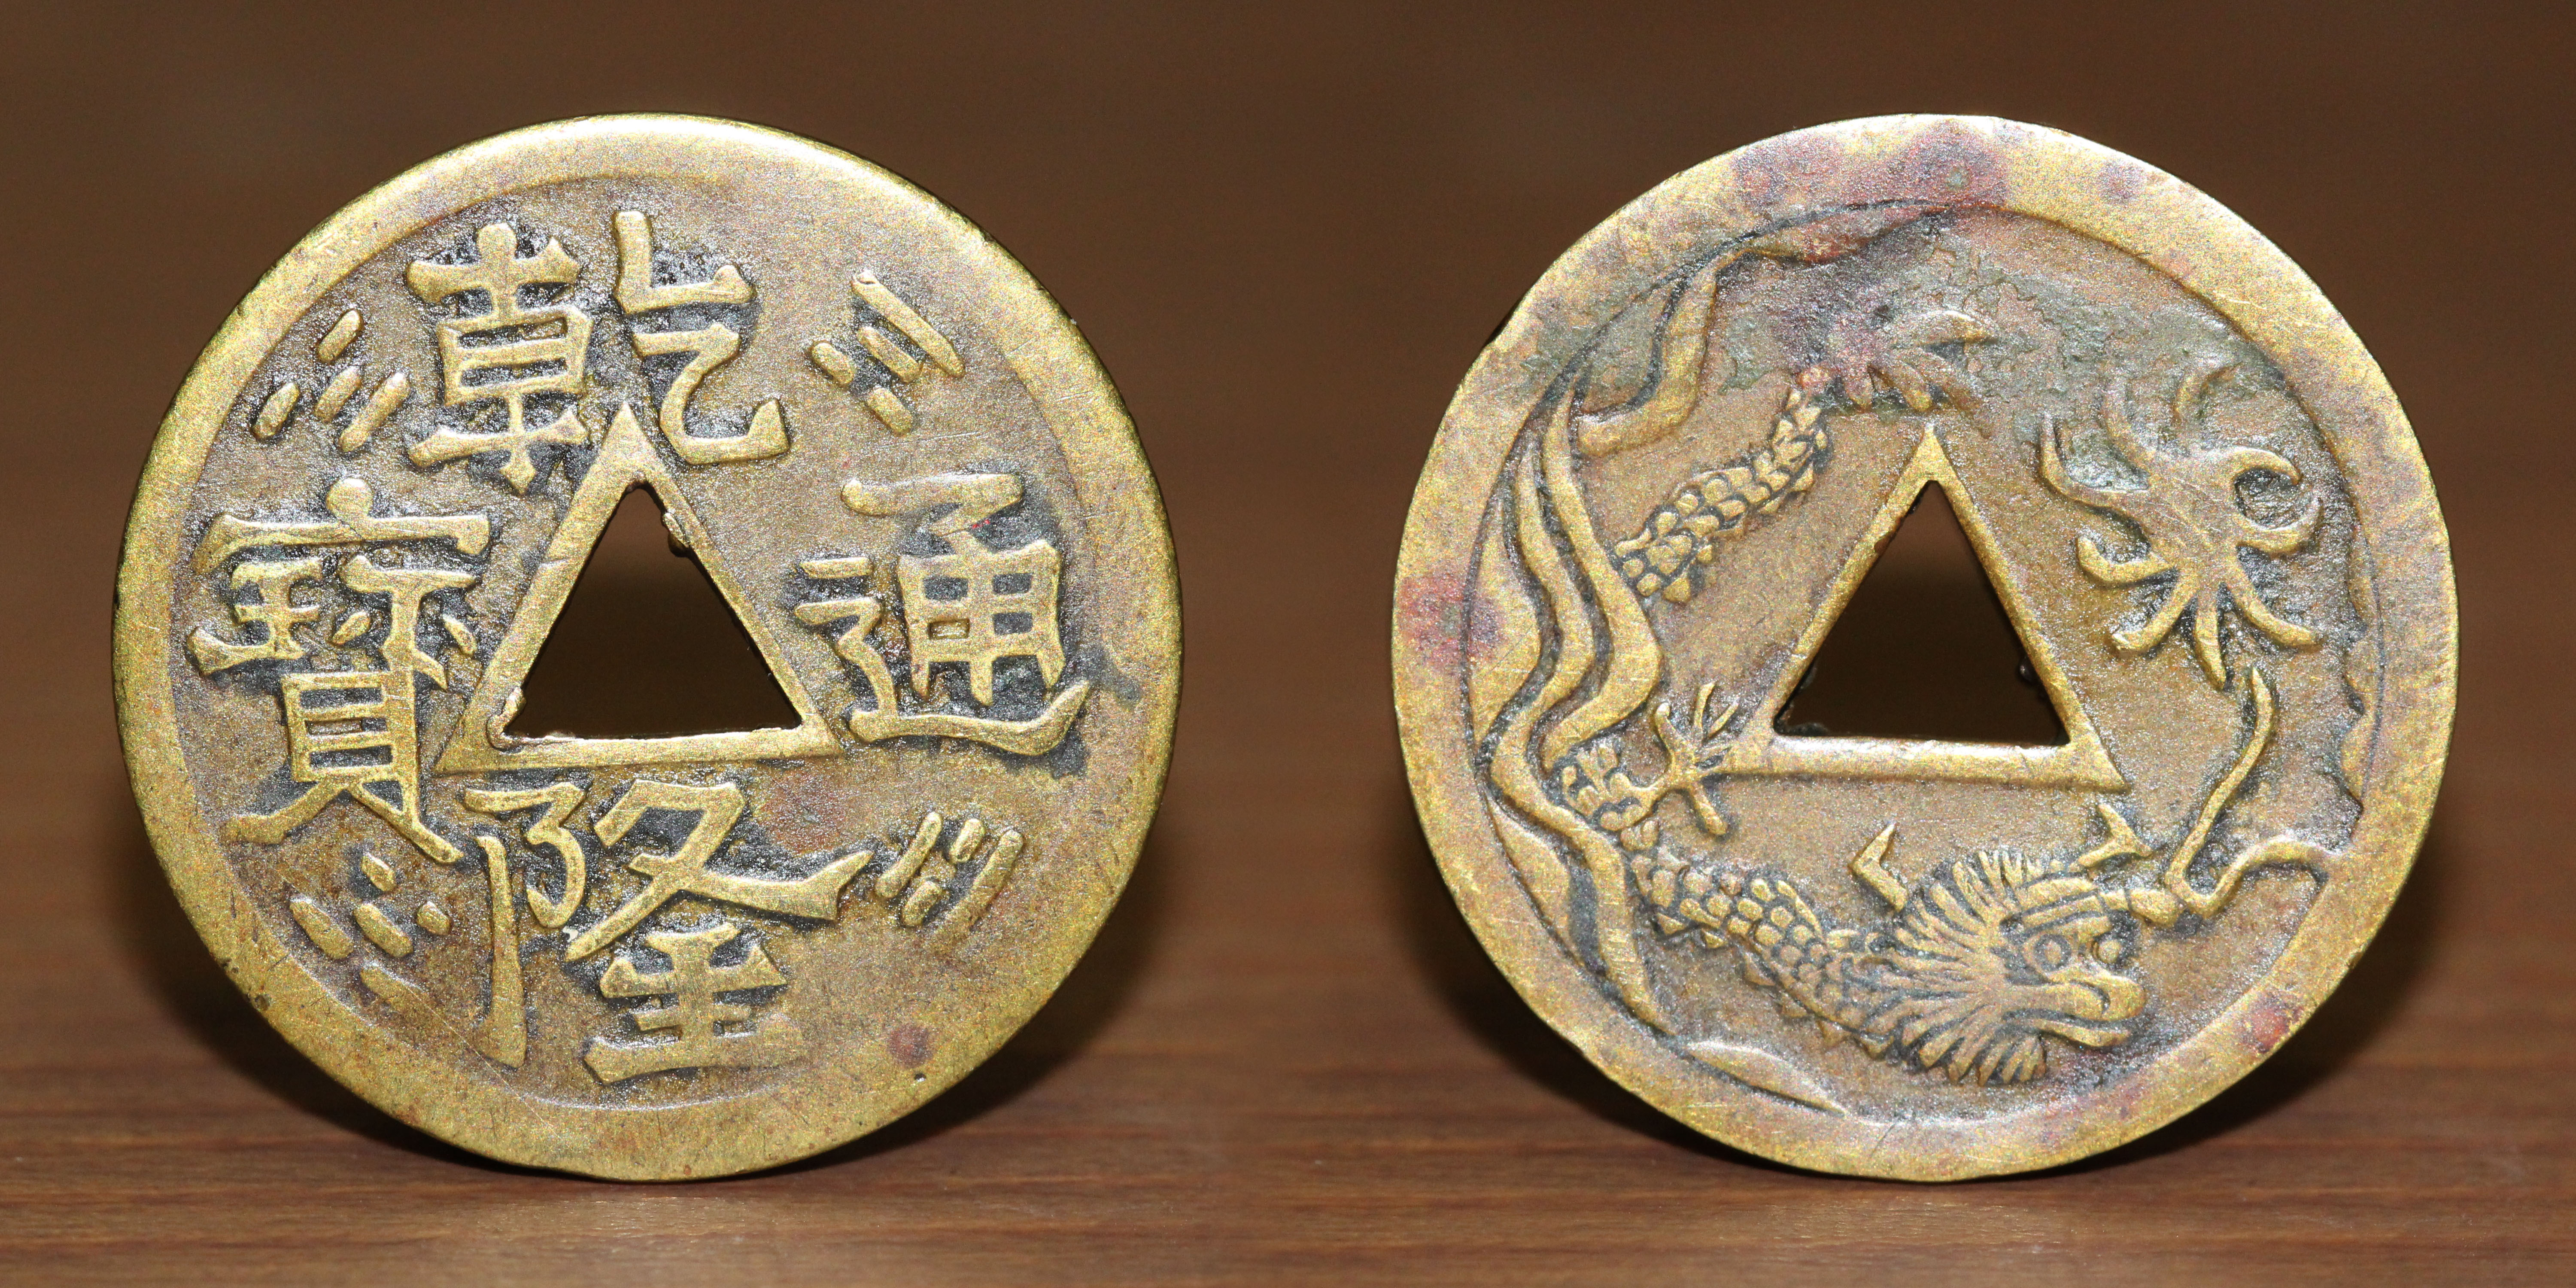 Chinese Brass Token Coin, this is a brass machine struck token with